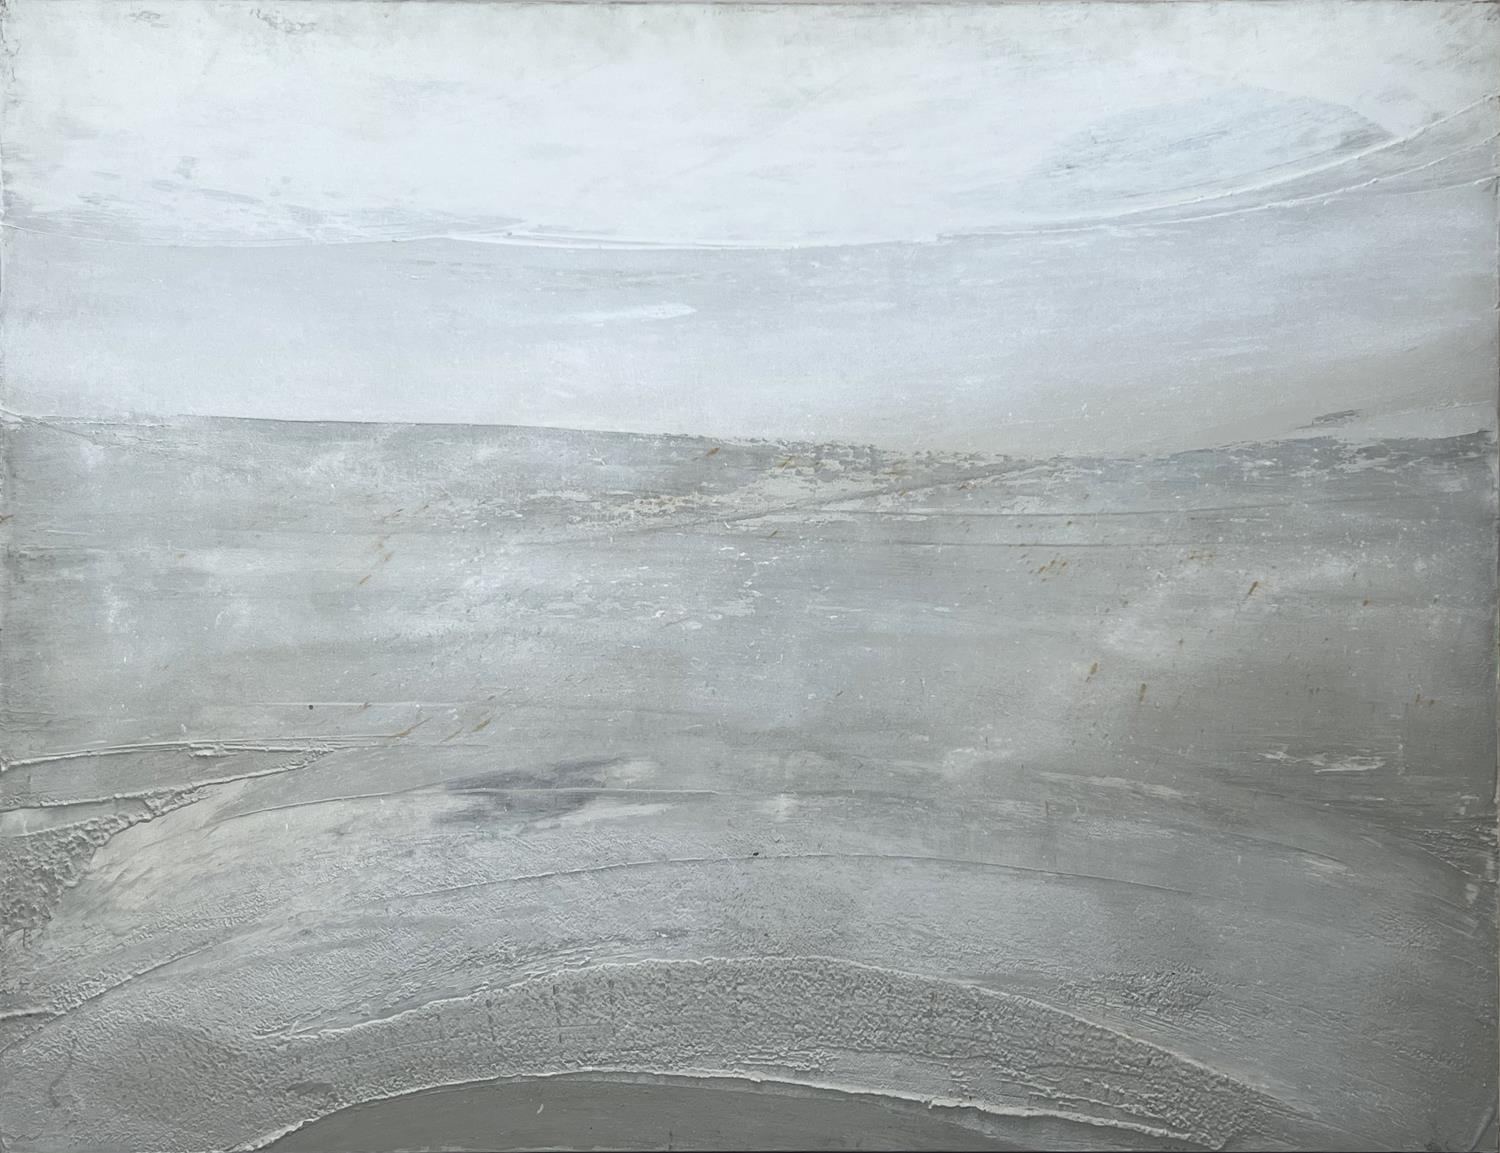 PS NAGGAR, 'White landscape', oil on canvas, 114cm x 146cm, inscribed verso.